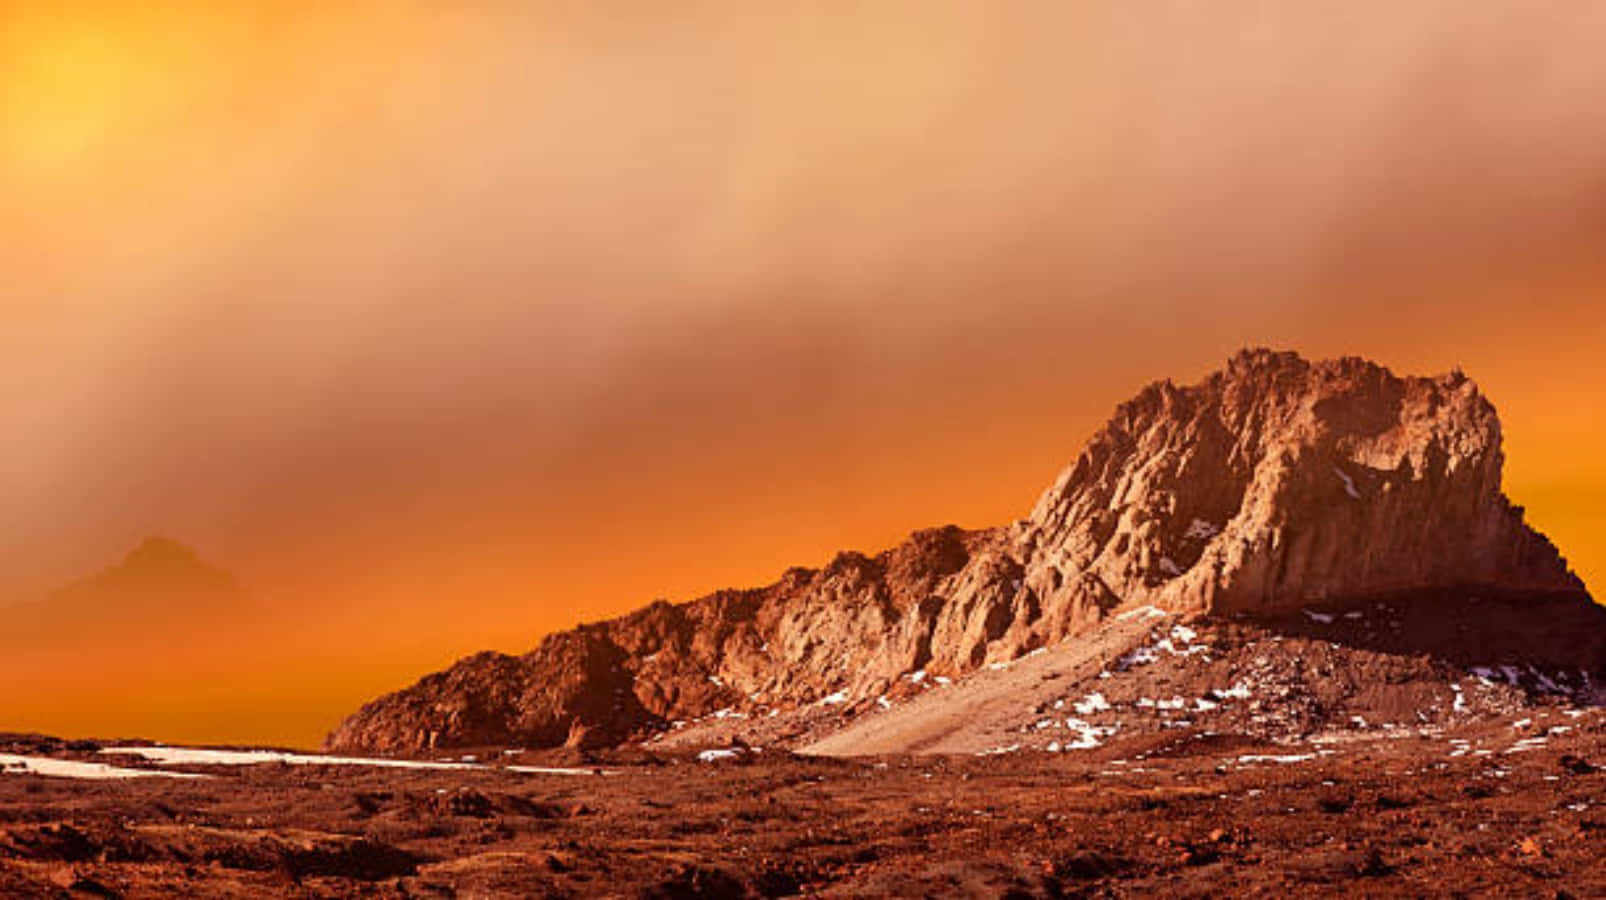 The rocky vistas of Mars' surface